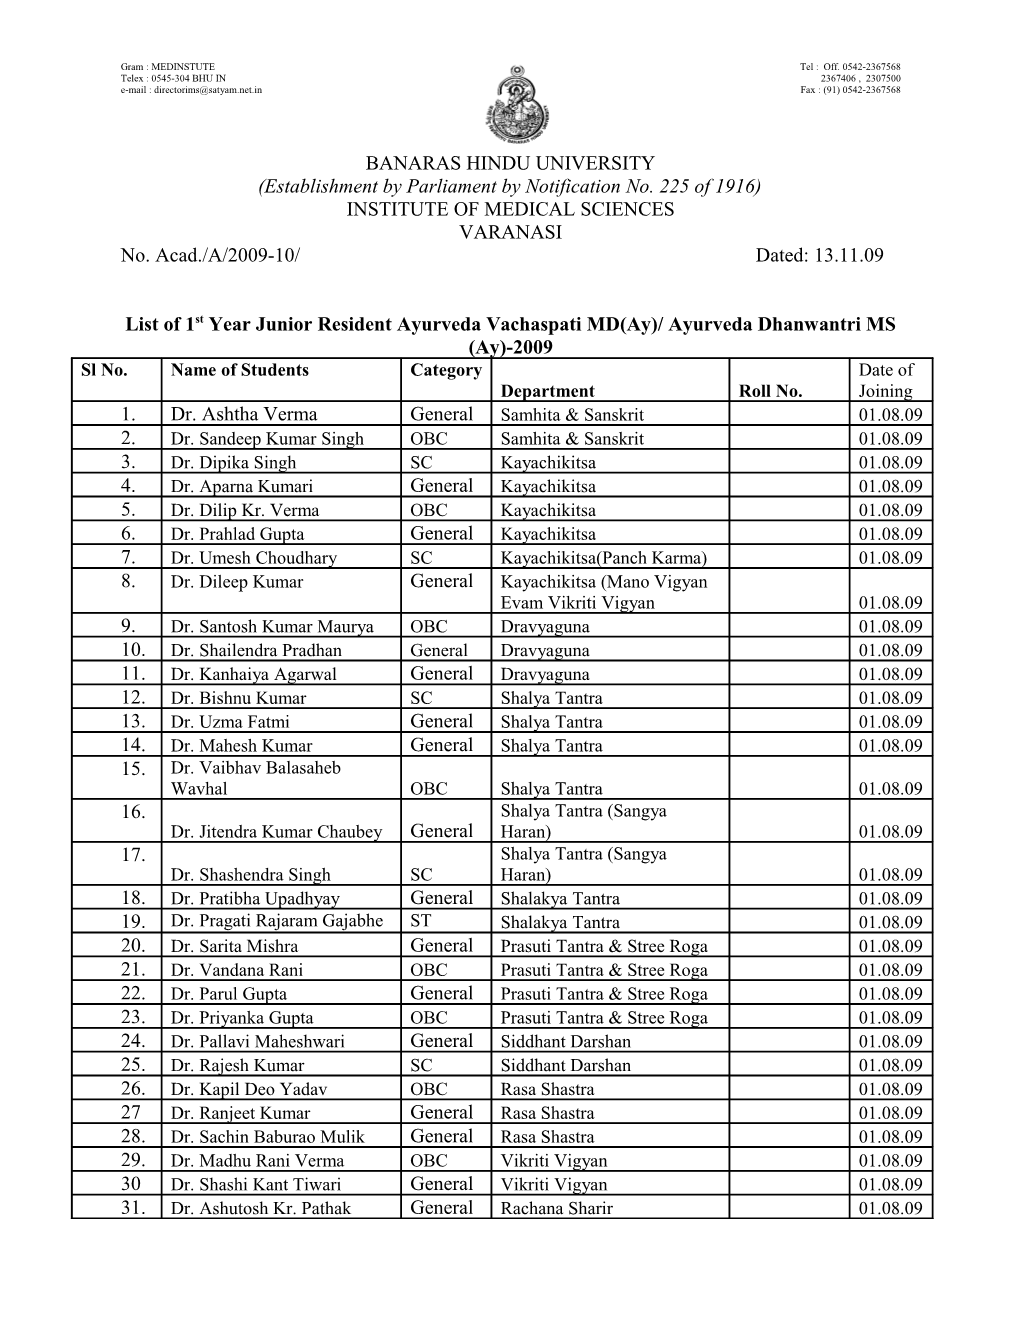 List of 1St Year Junior Resident Ayurveda Vachaspati MD(Ay)/ Ayurveda Dhanwantri MS (Ay)-2009